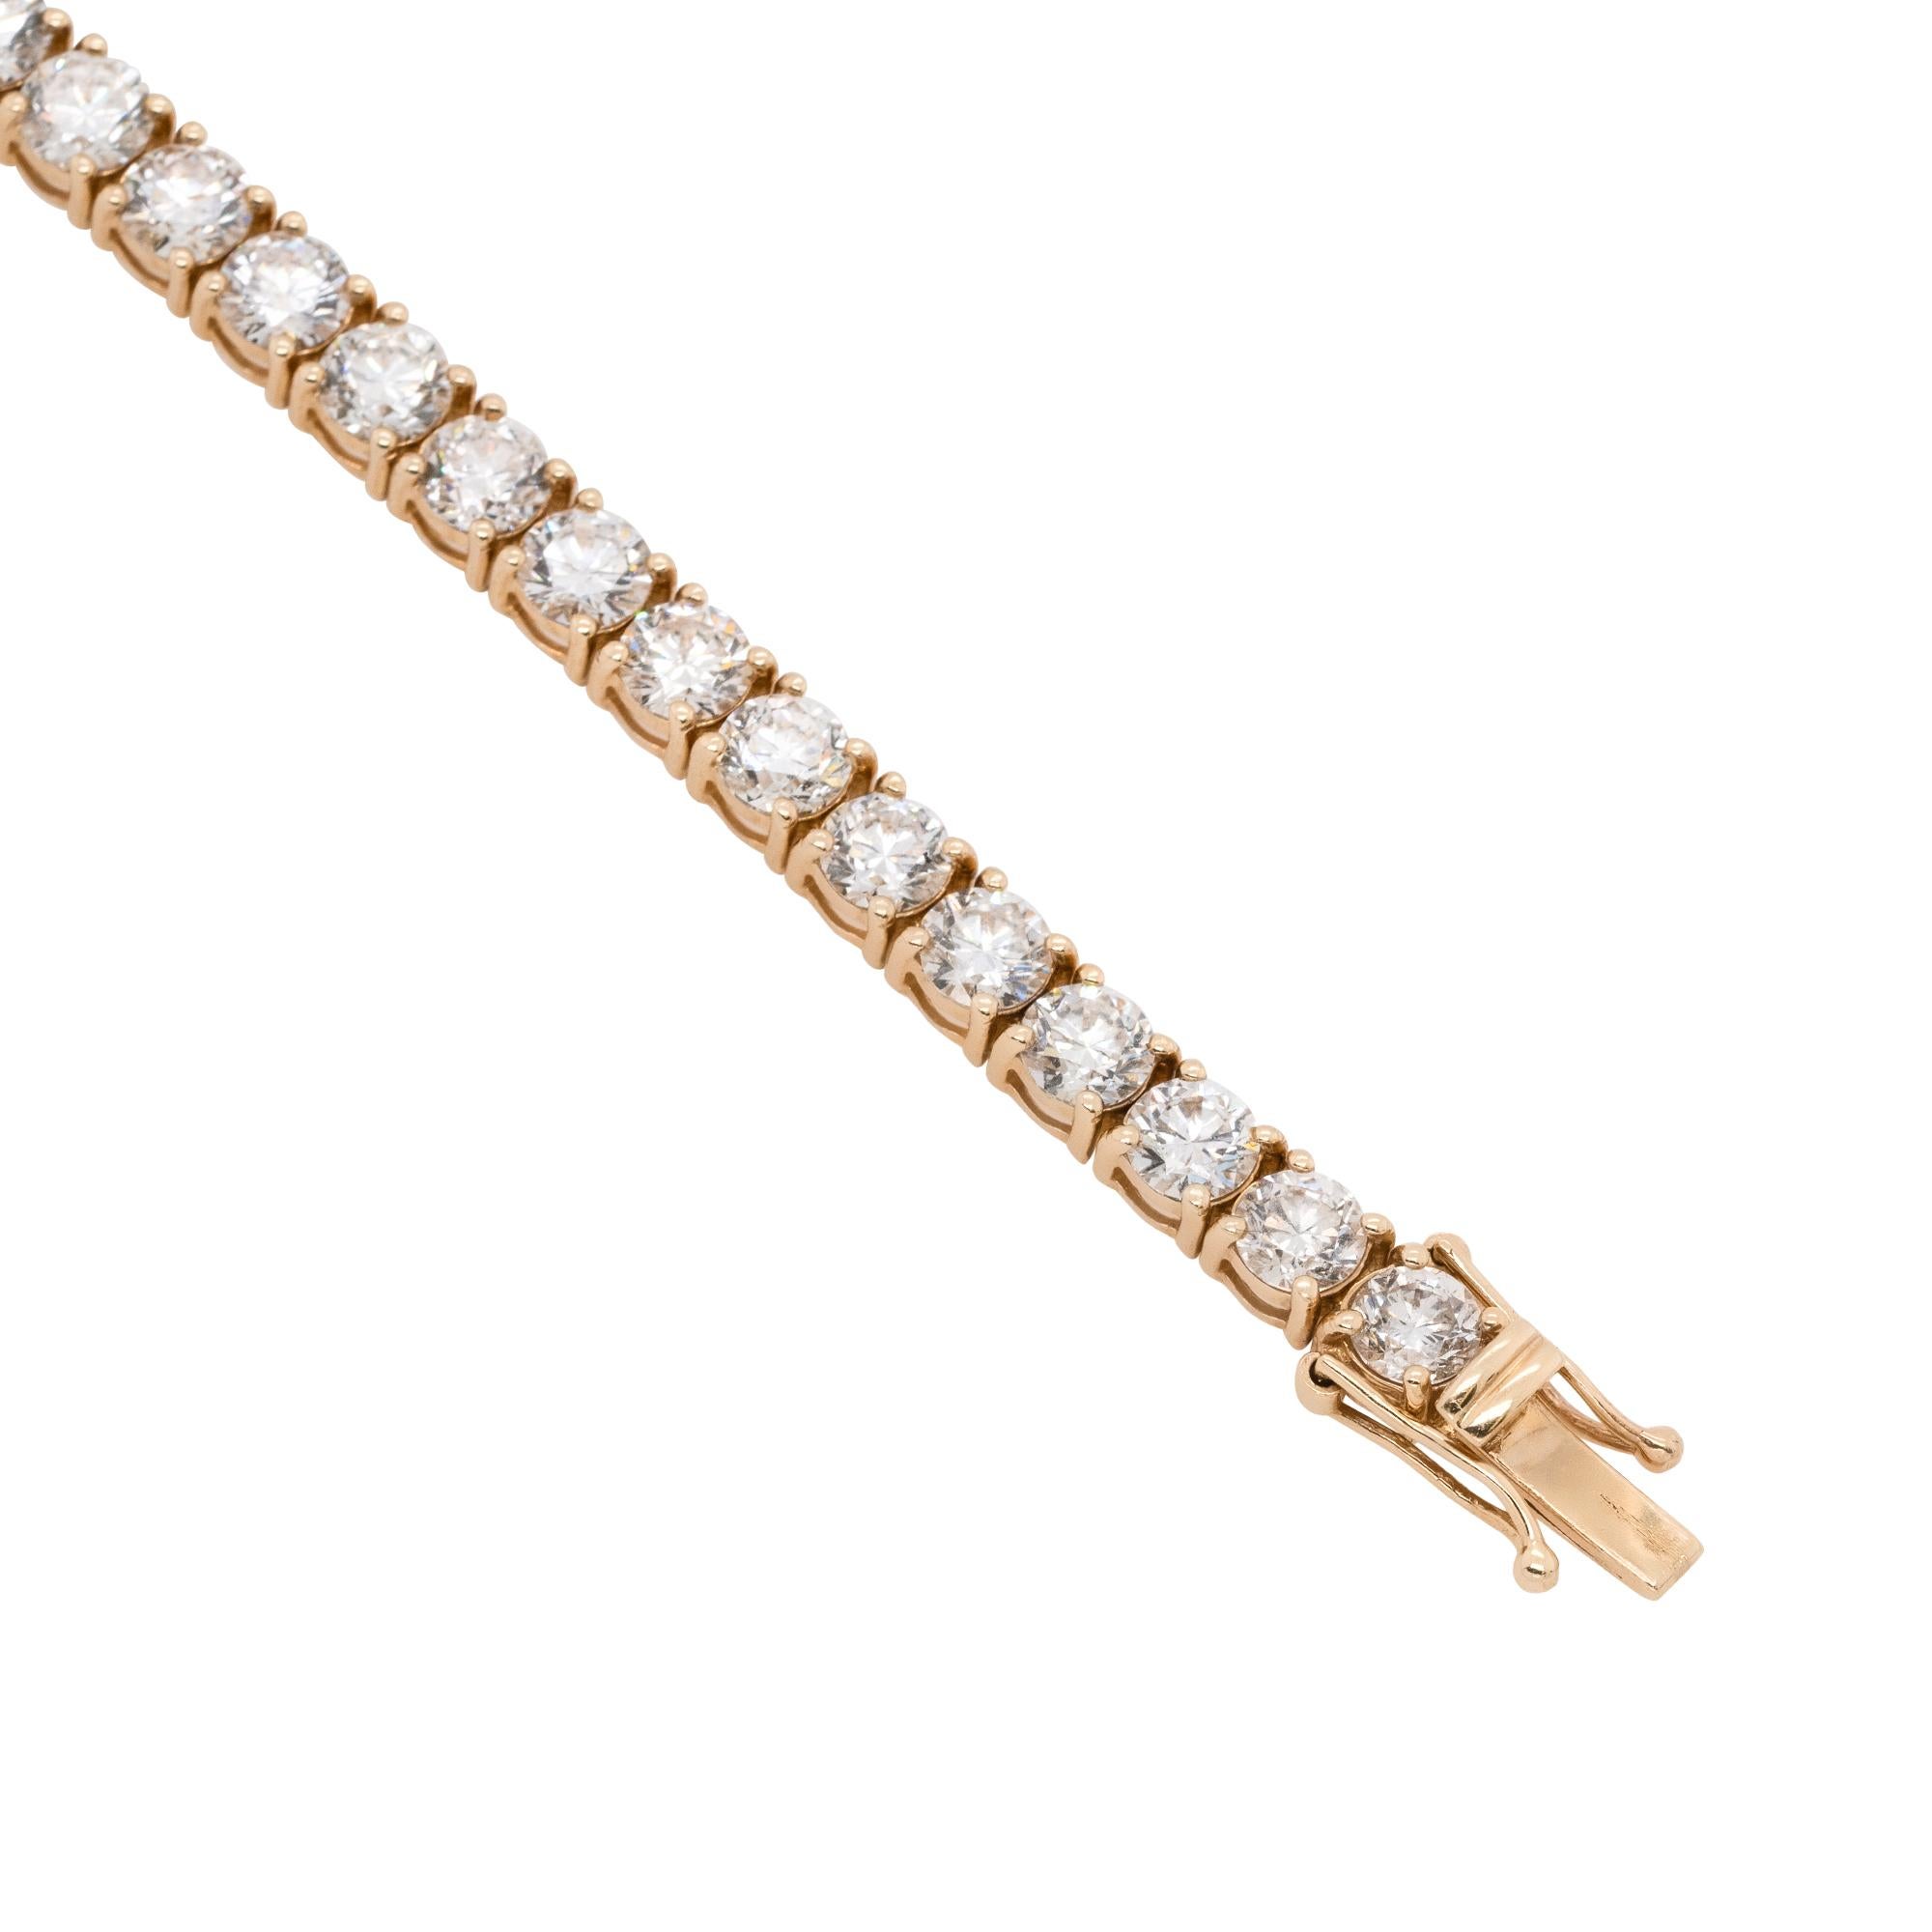 13.03 Carat Round Cut Diamond Tennis Bracelet 14 Karat in Stock For Sale 1